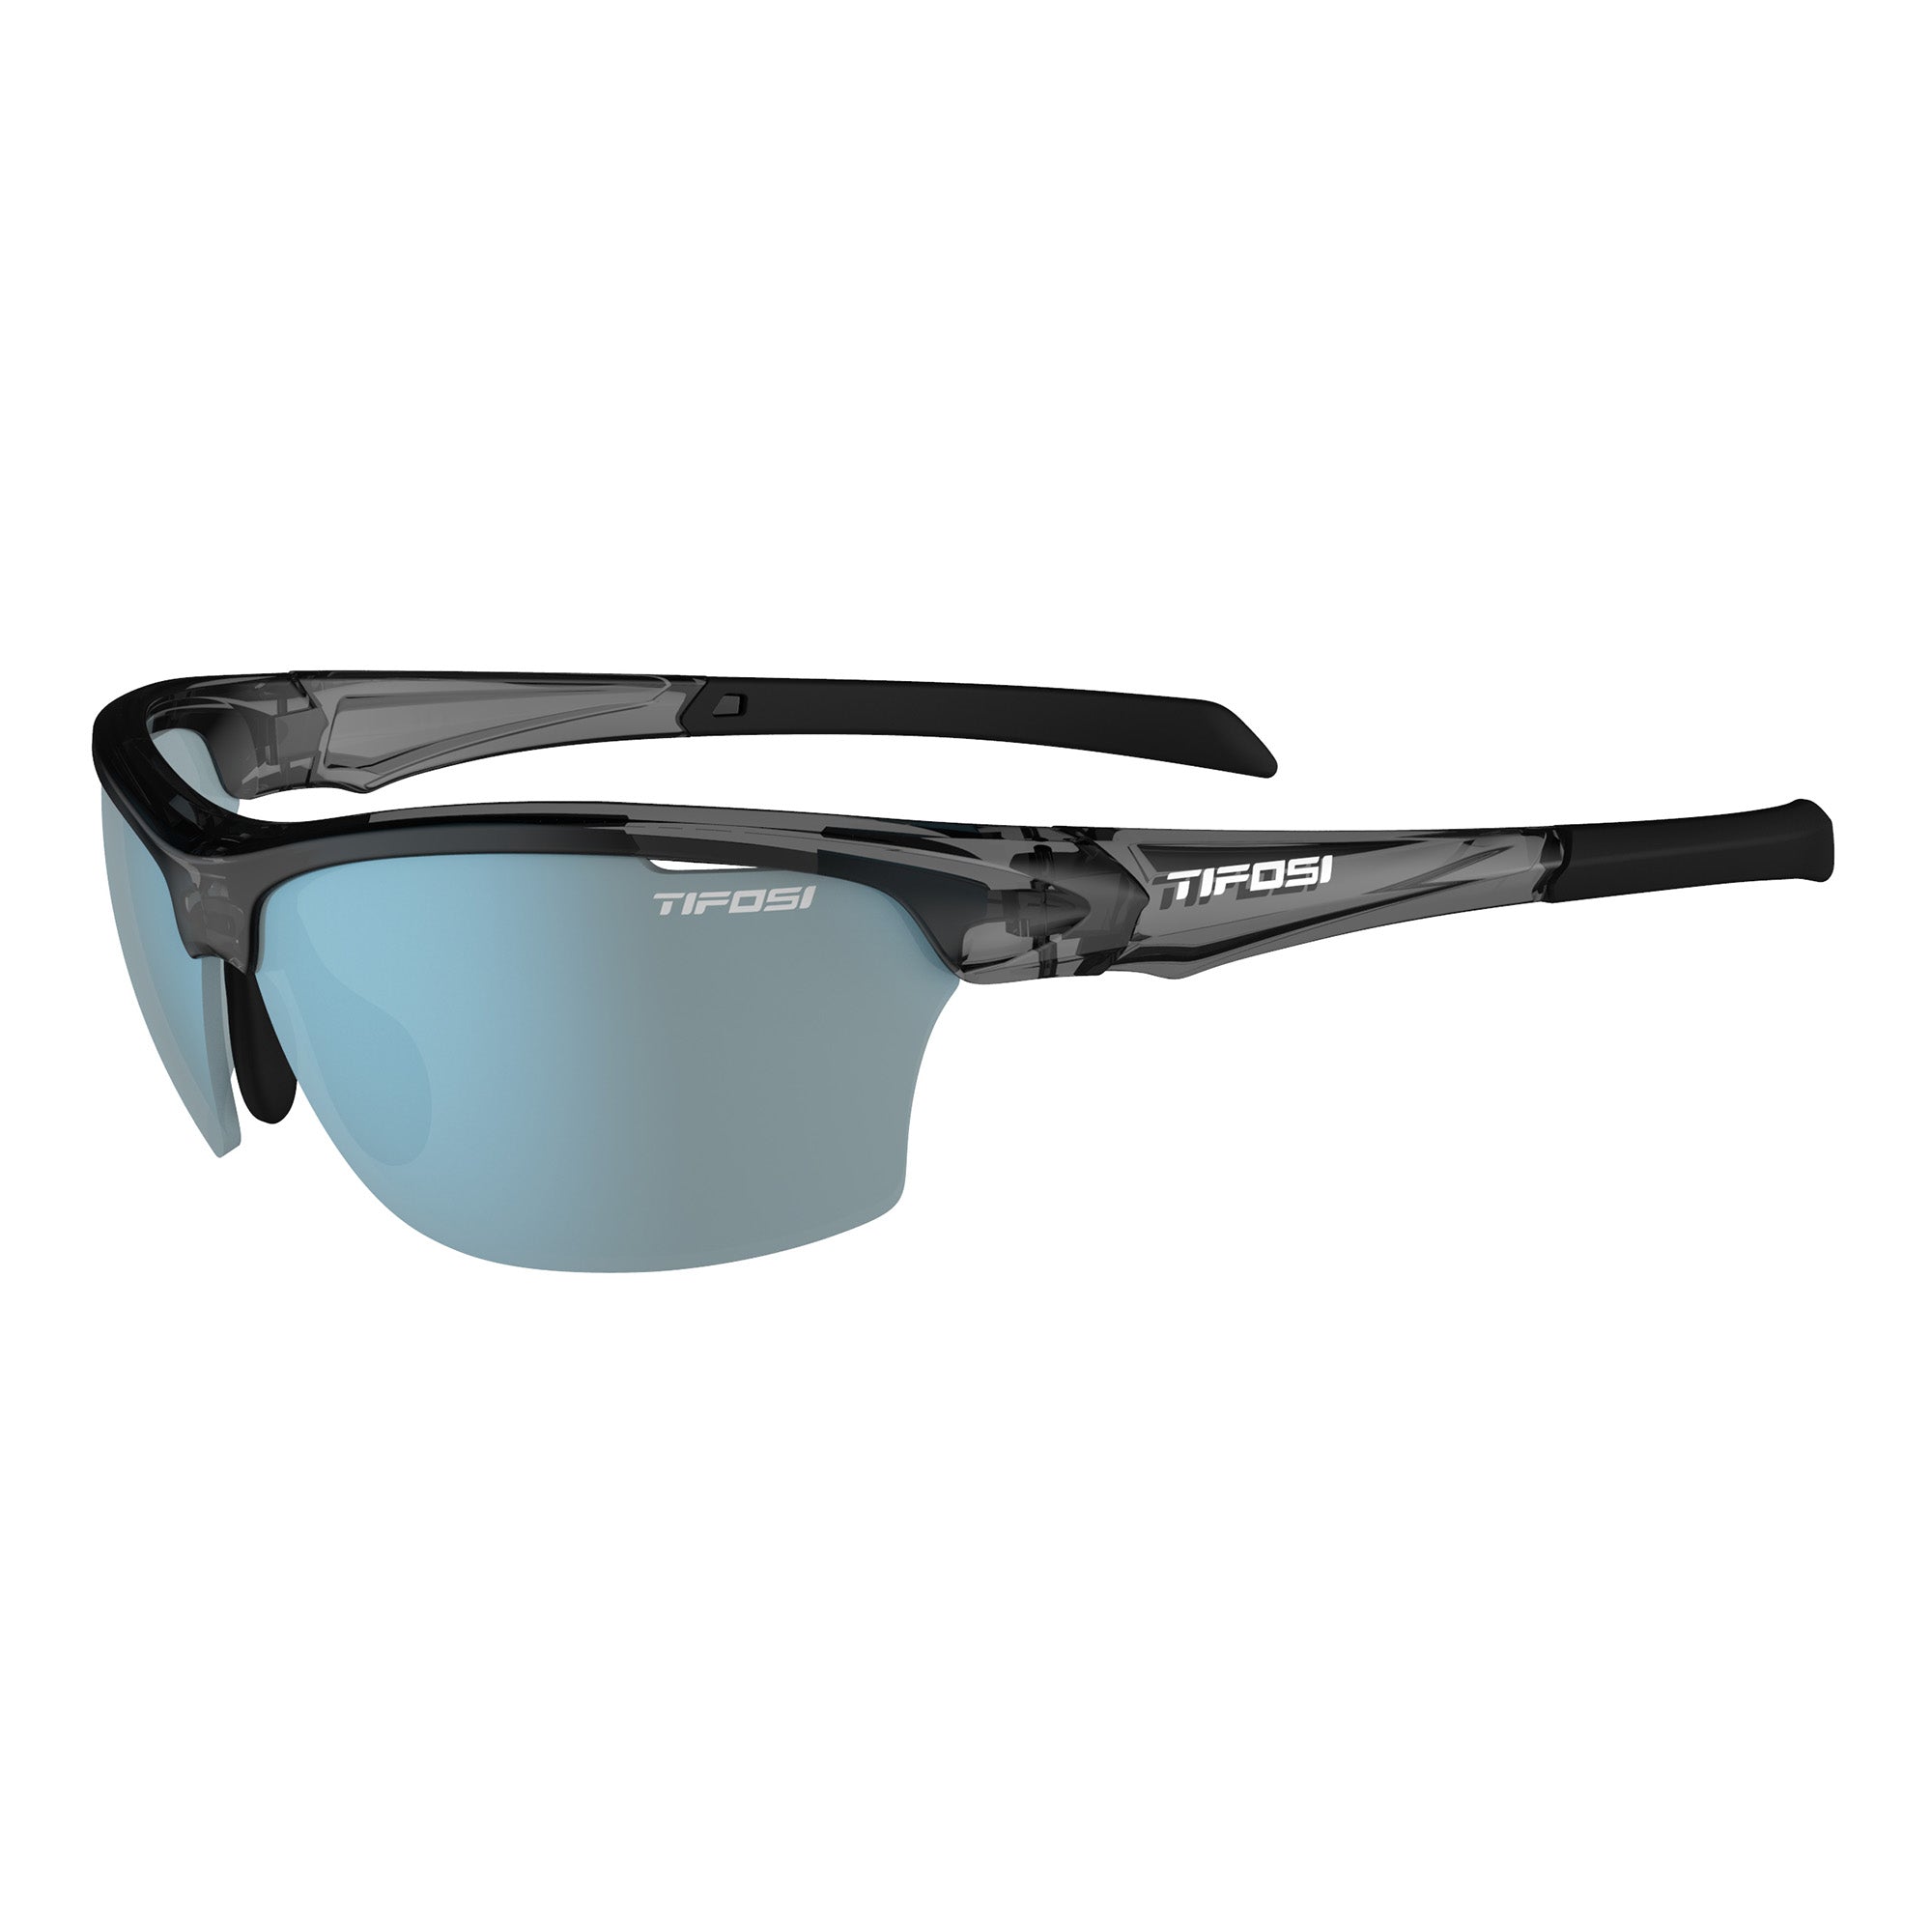 Tifosi Intense Interchangeable Lens Sunglasses